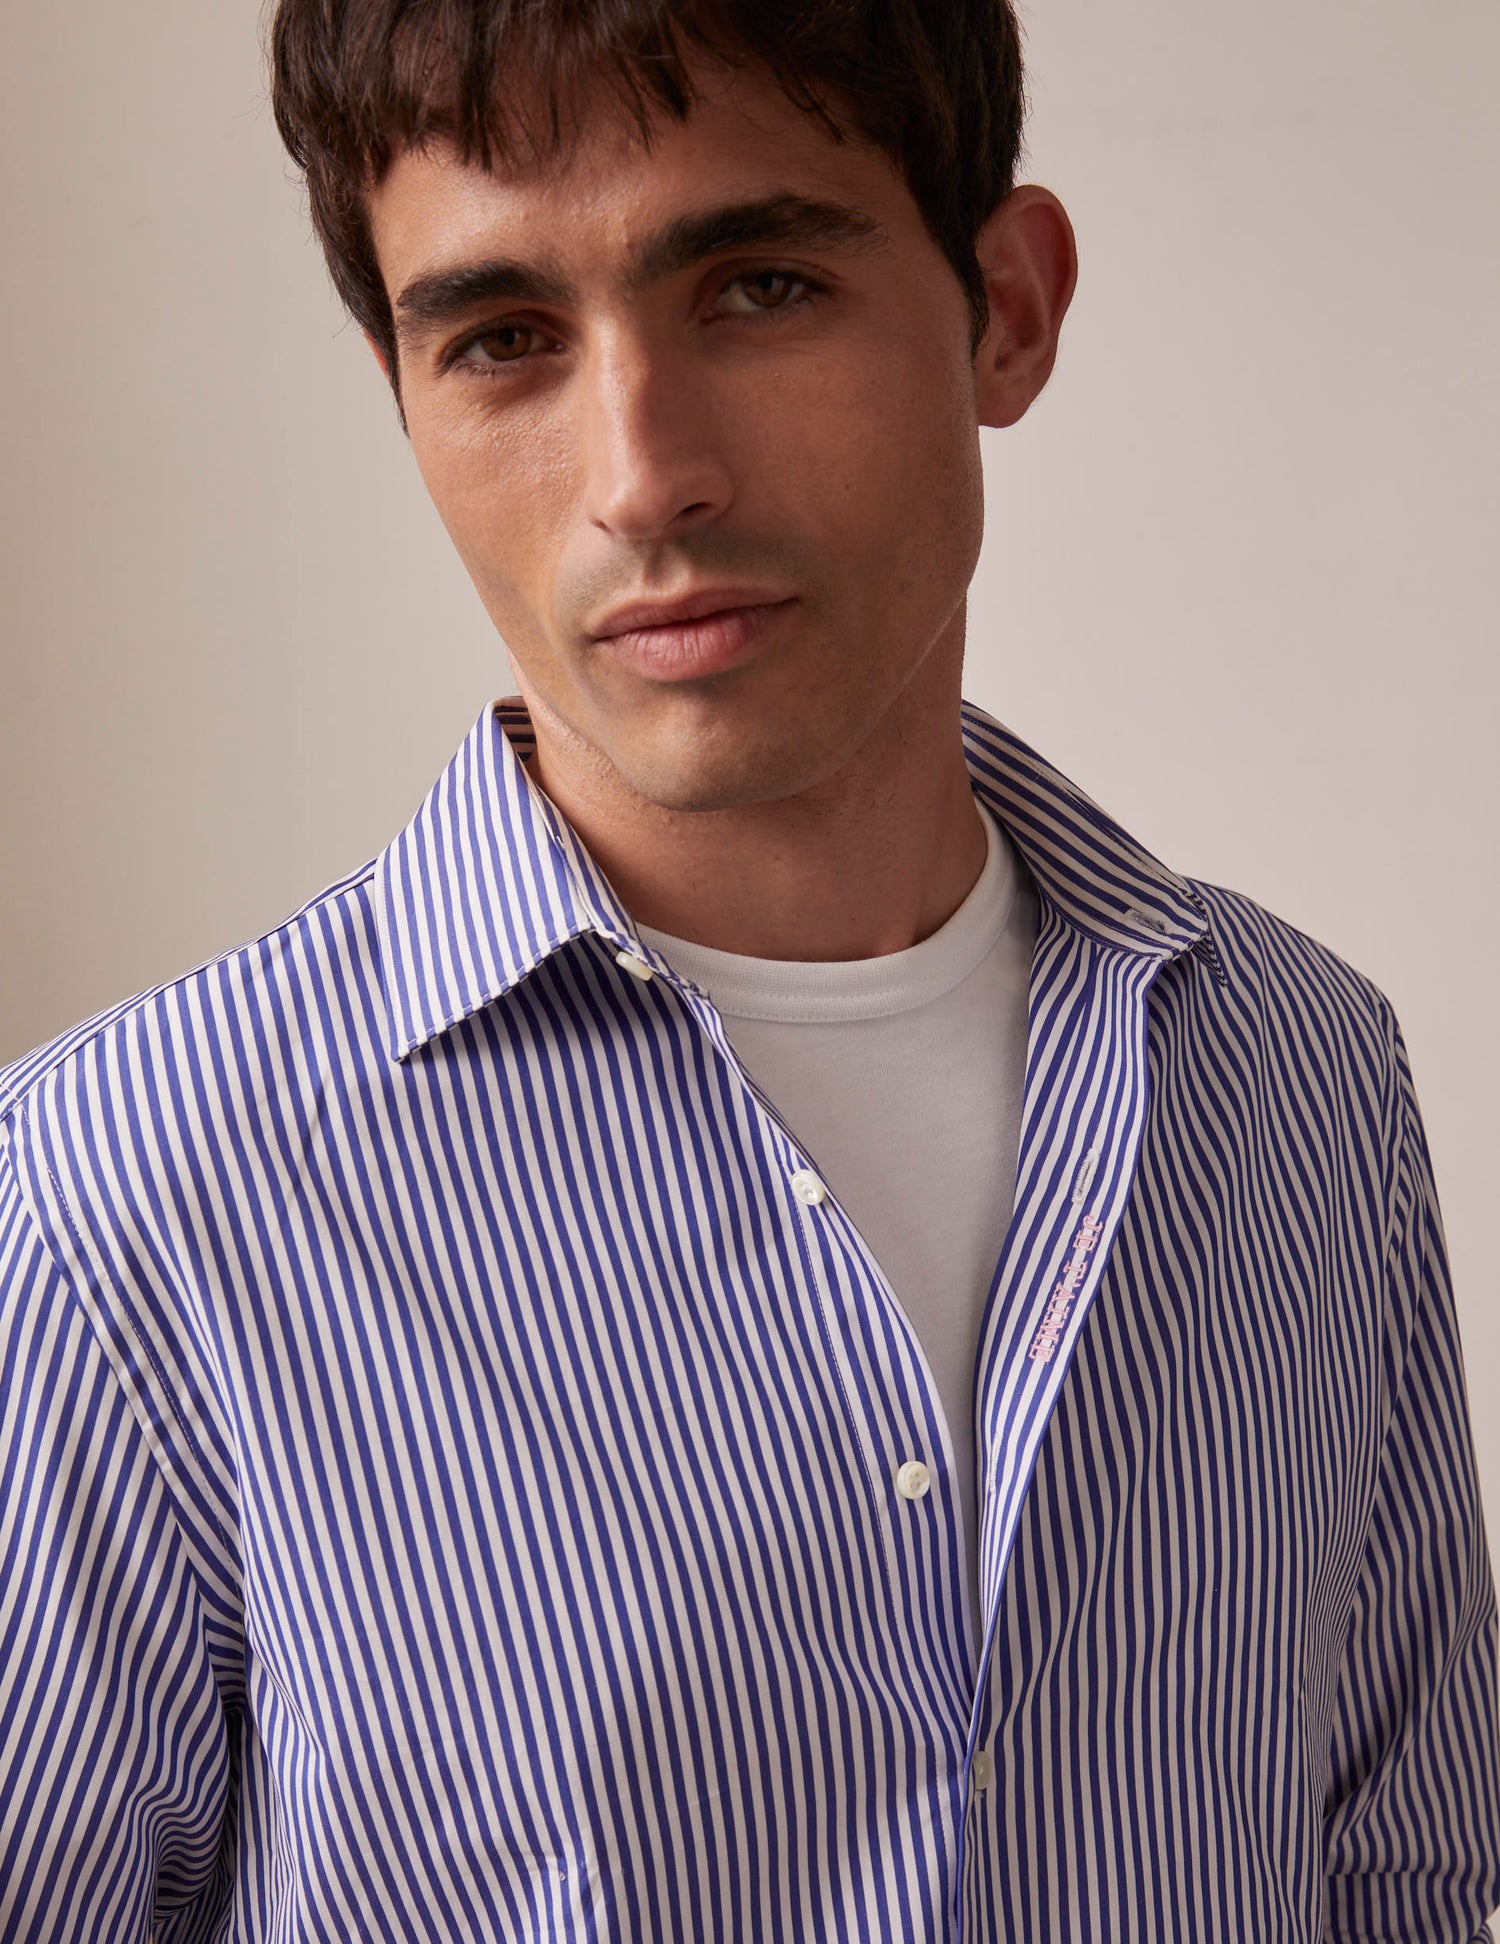 Unisex “Je t'aime” navy blue striped shirt - Poplin - Figaret Collar#1